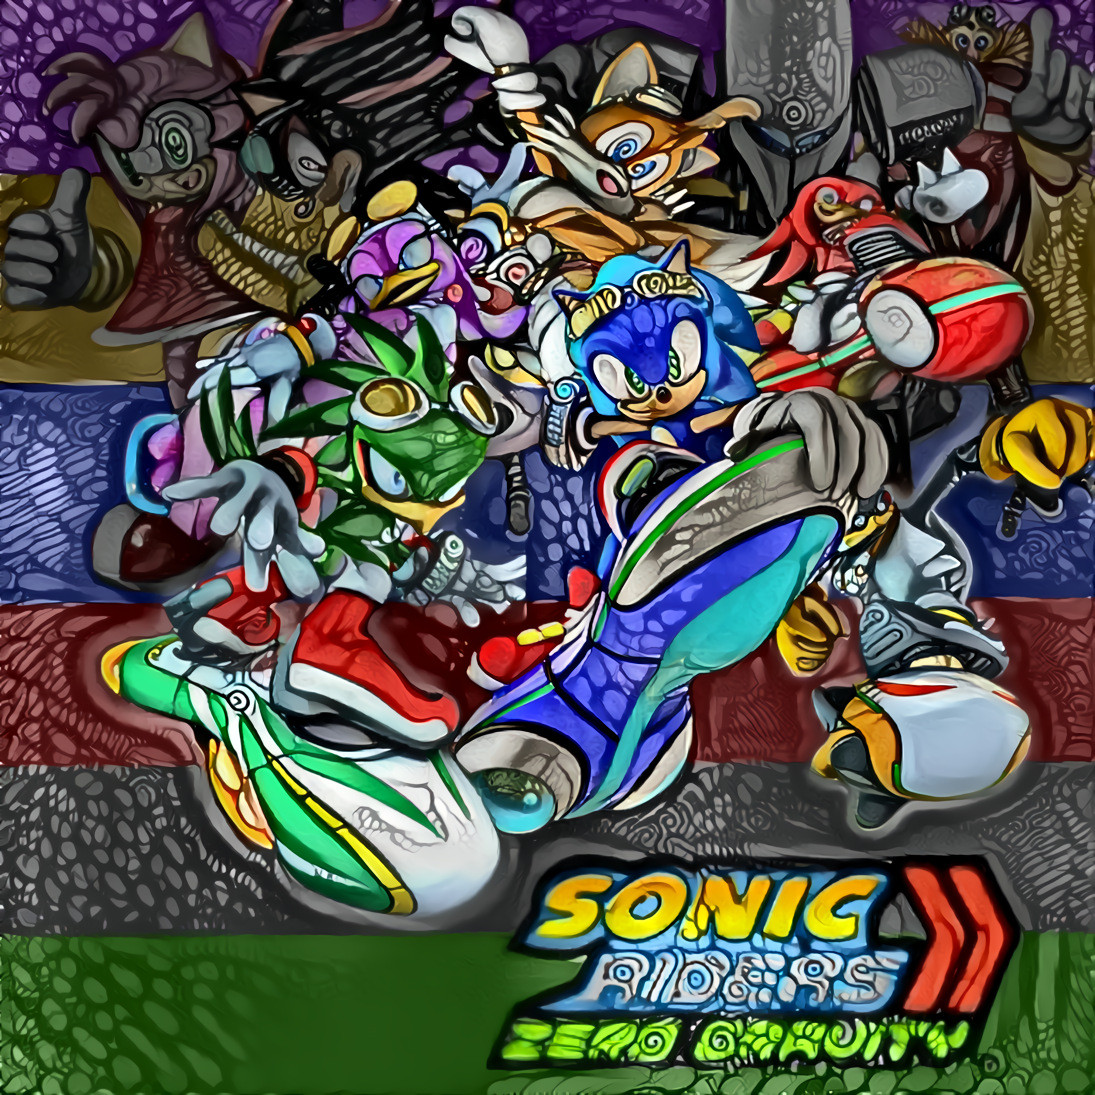 Sonic riders 